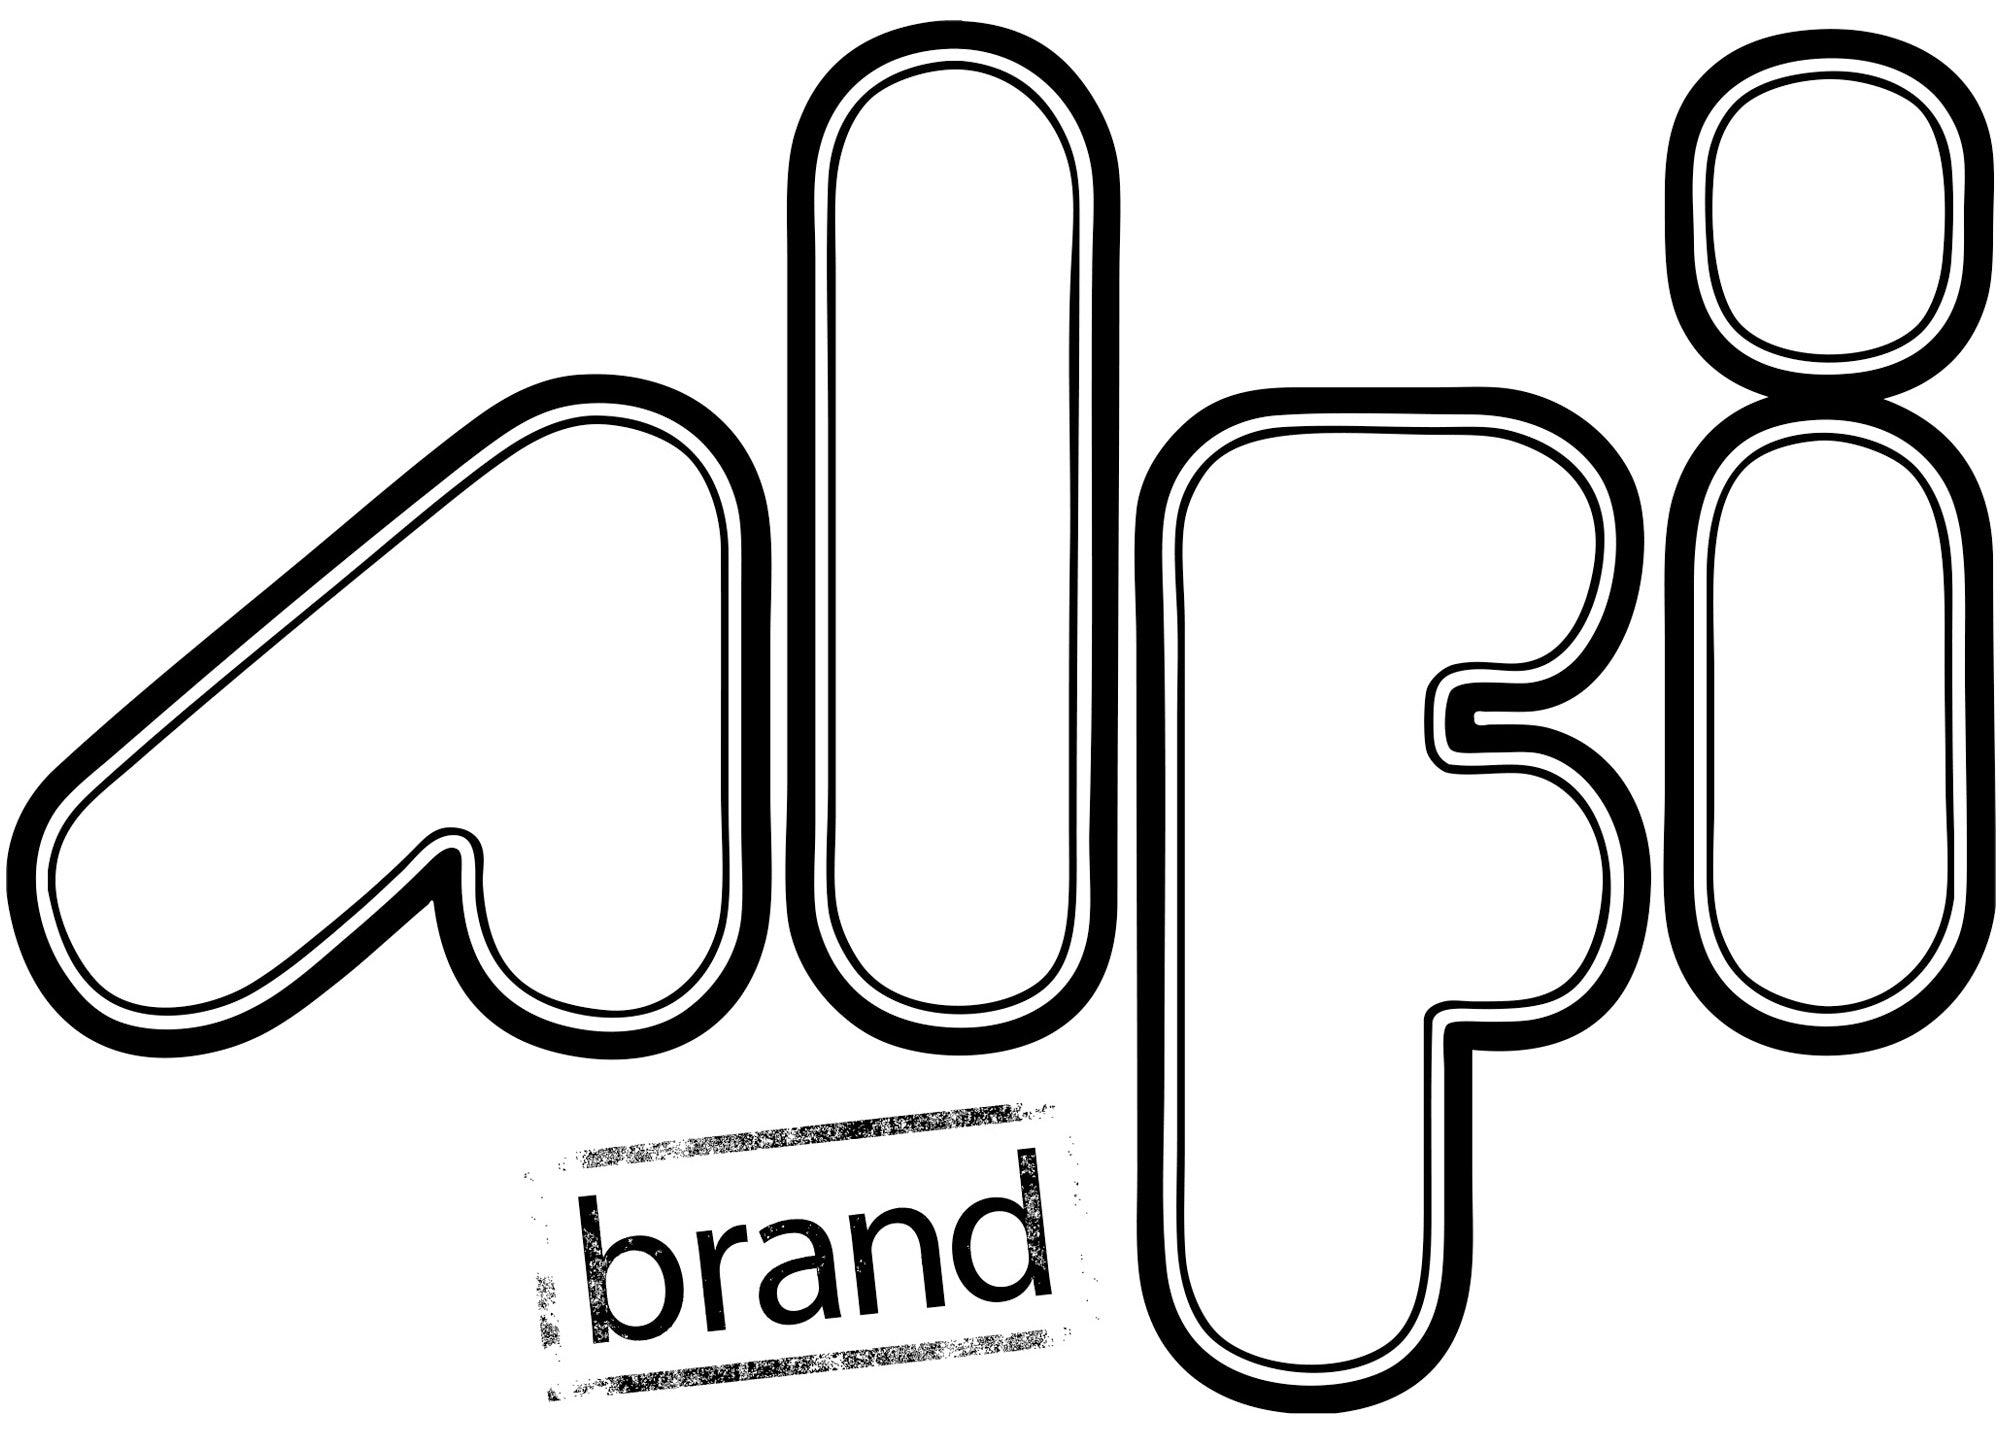 ALFI Brand - 36" Modern Stainless Steel Linear Shower Drain  w/o Cover | ABLD36A